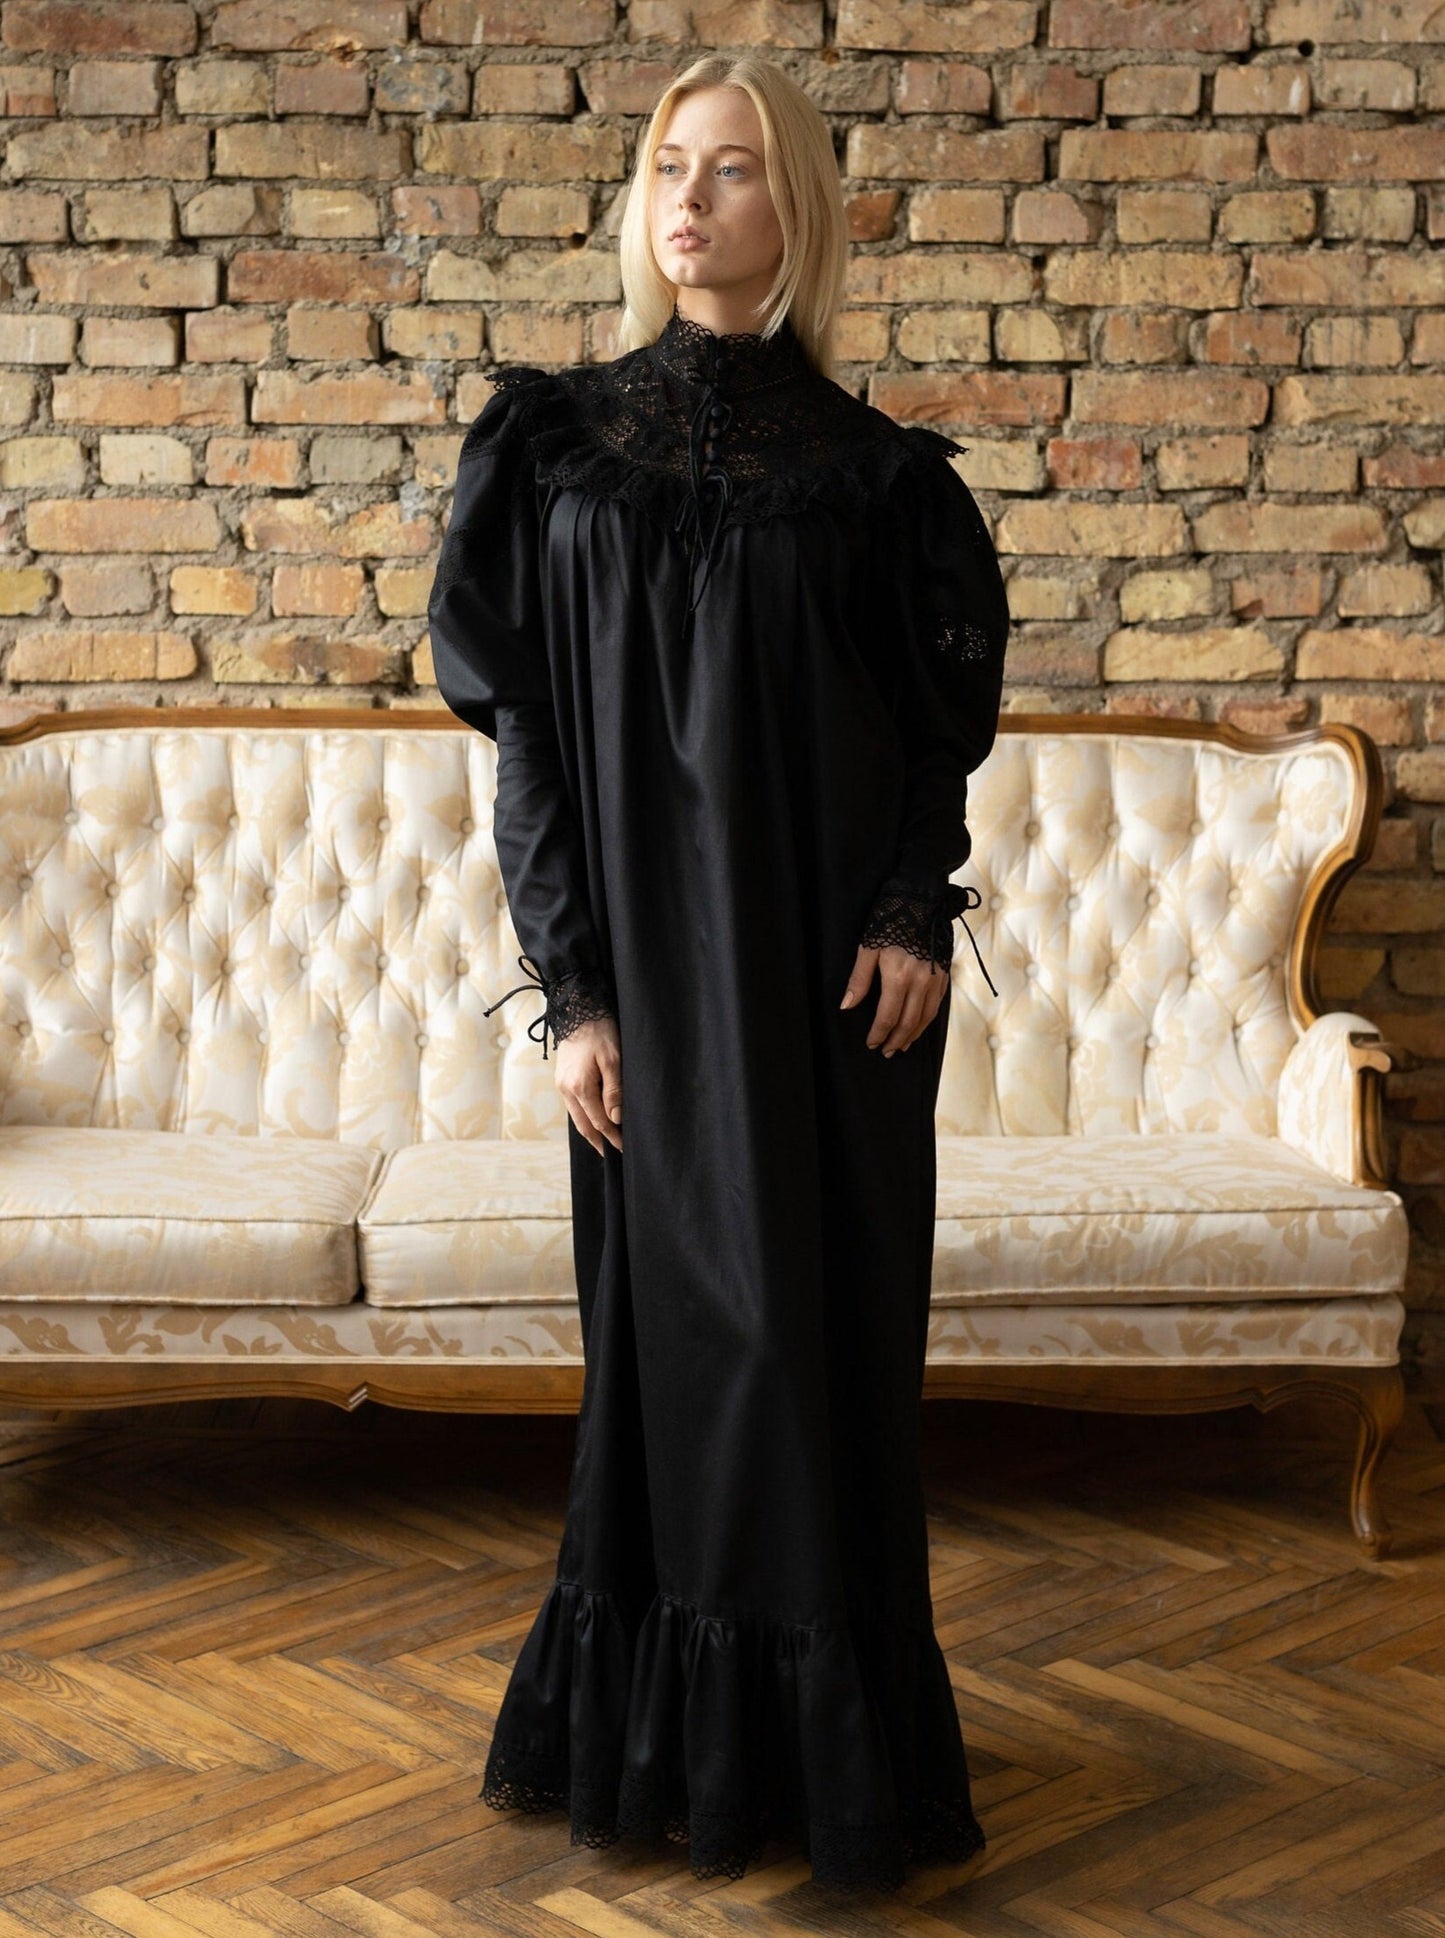 Edwardian Winter - Vintage Inspired Gown in Black Cotton